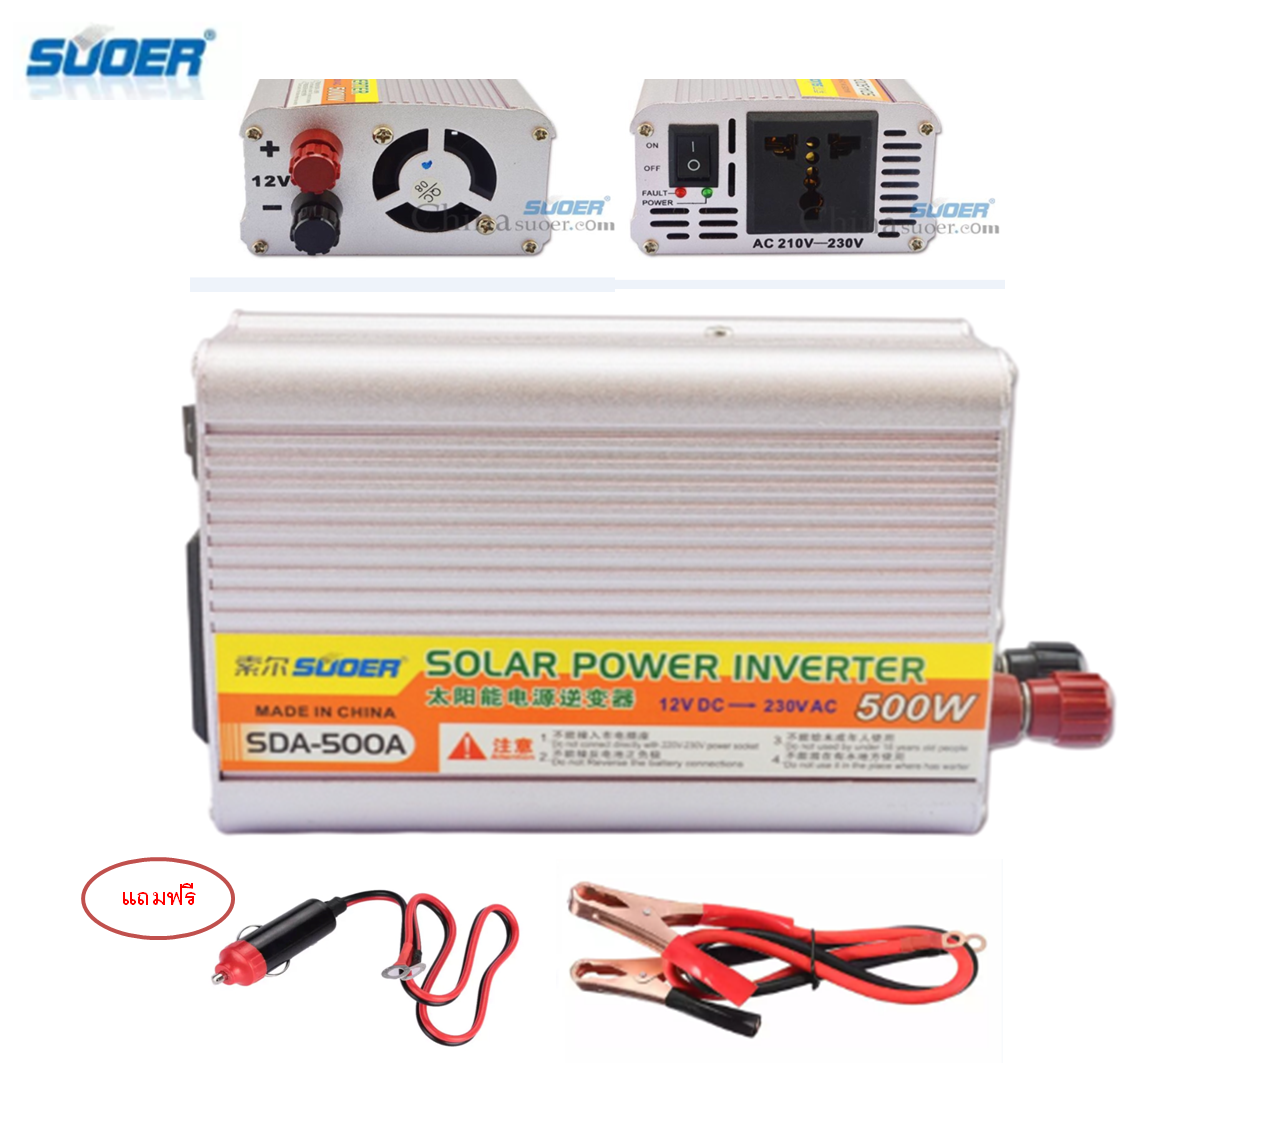 Suoer อินเวอร์เตอร์ 500W 12V to 220V Portable Smart Power Inverter